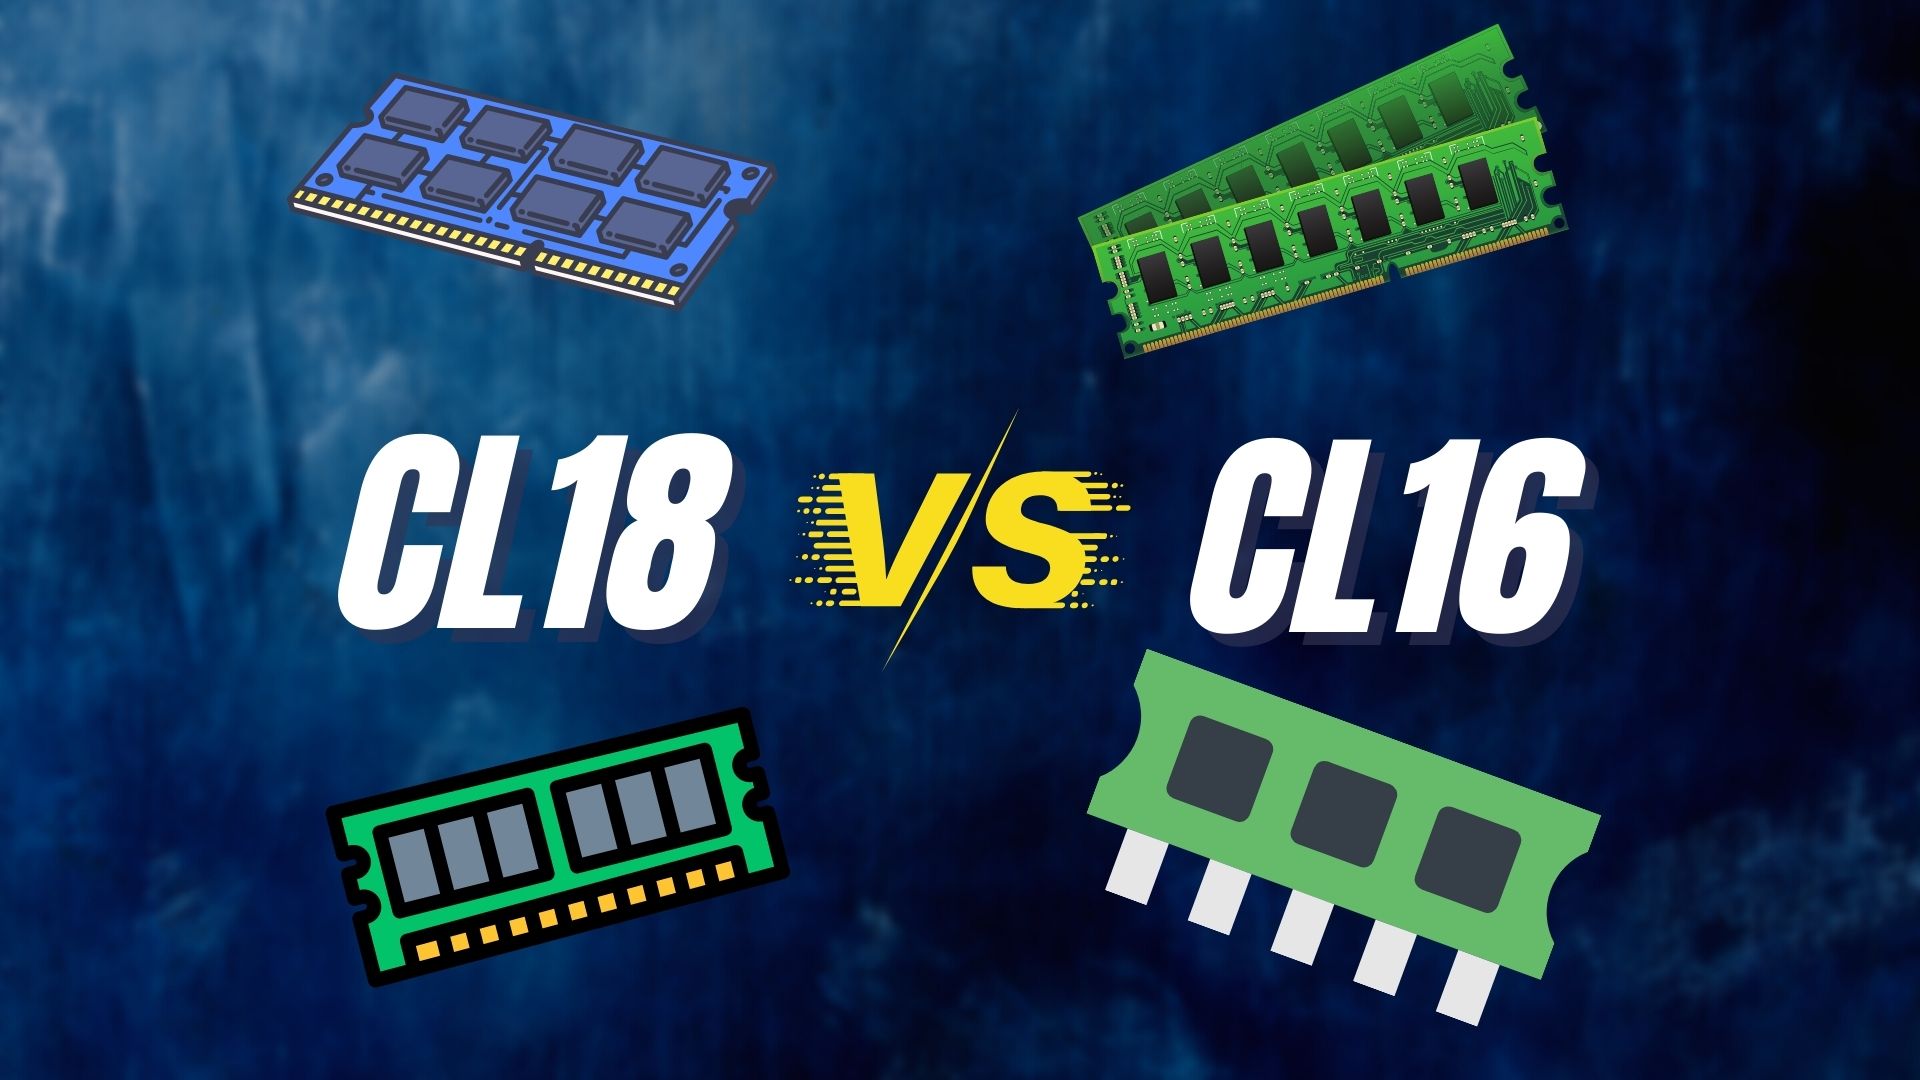 CL18 vs CL16